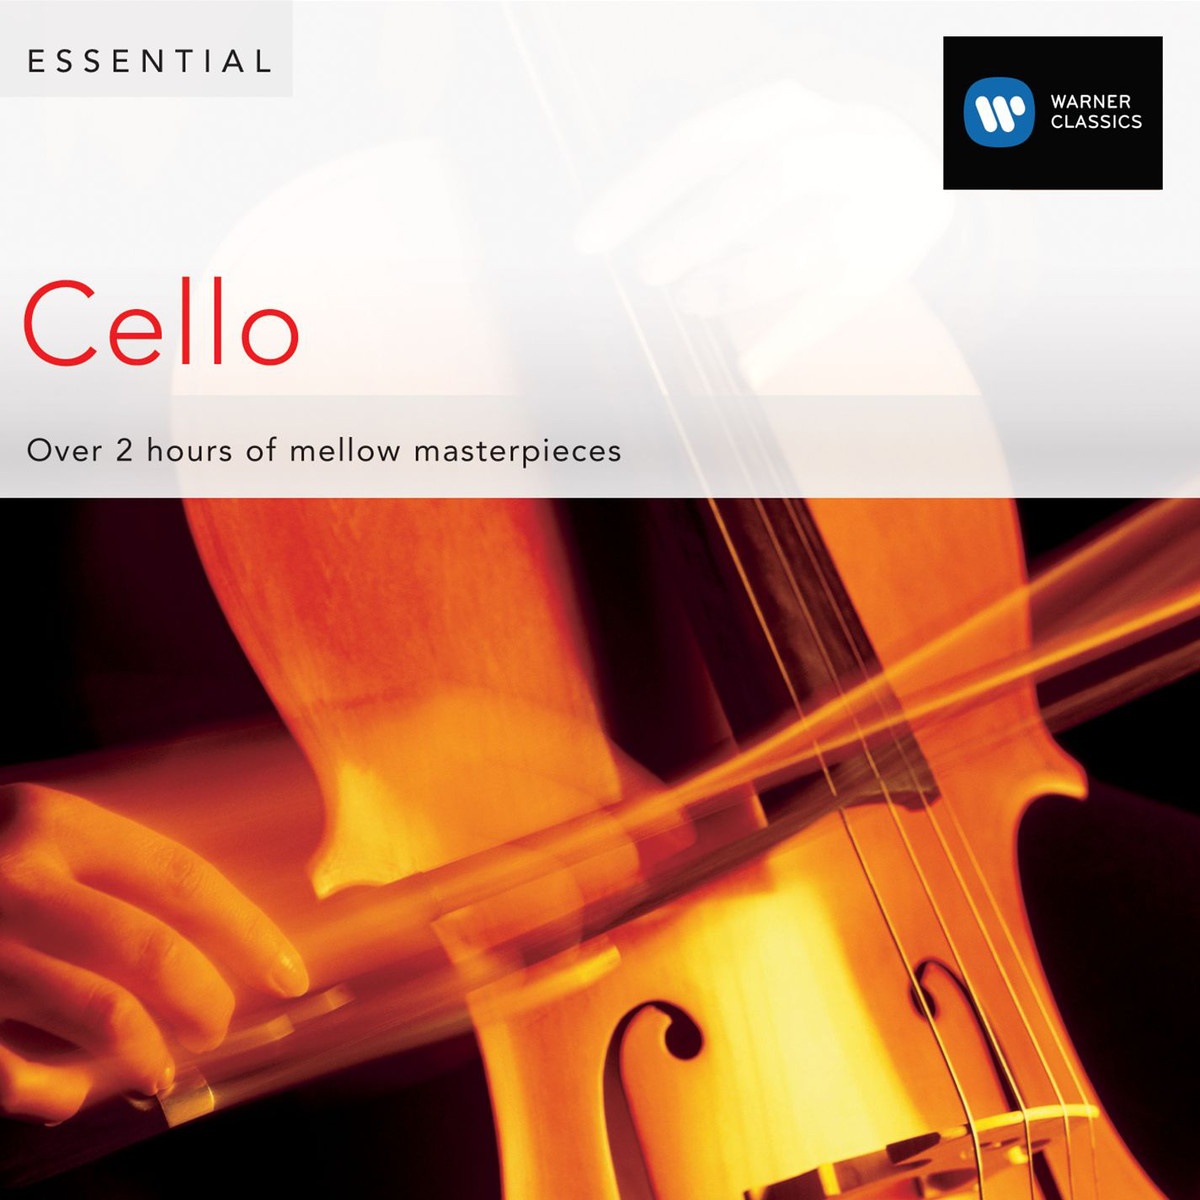 6 Suites Sonatas for Cello BWV100712, Suite No. 1 in G major, BWV1007: Pre lude